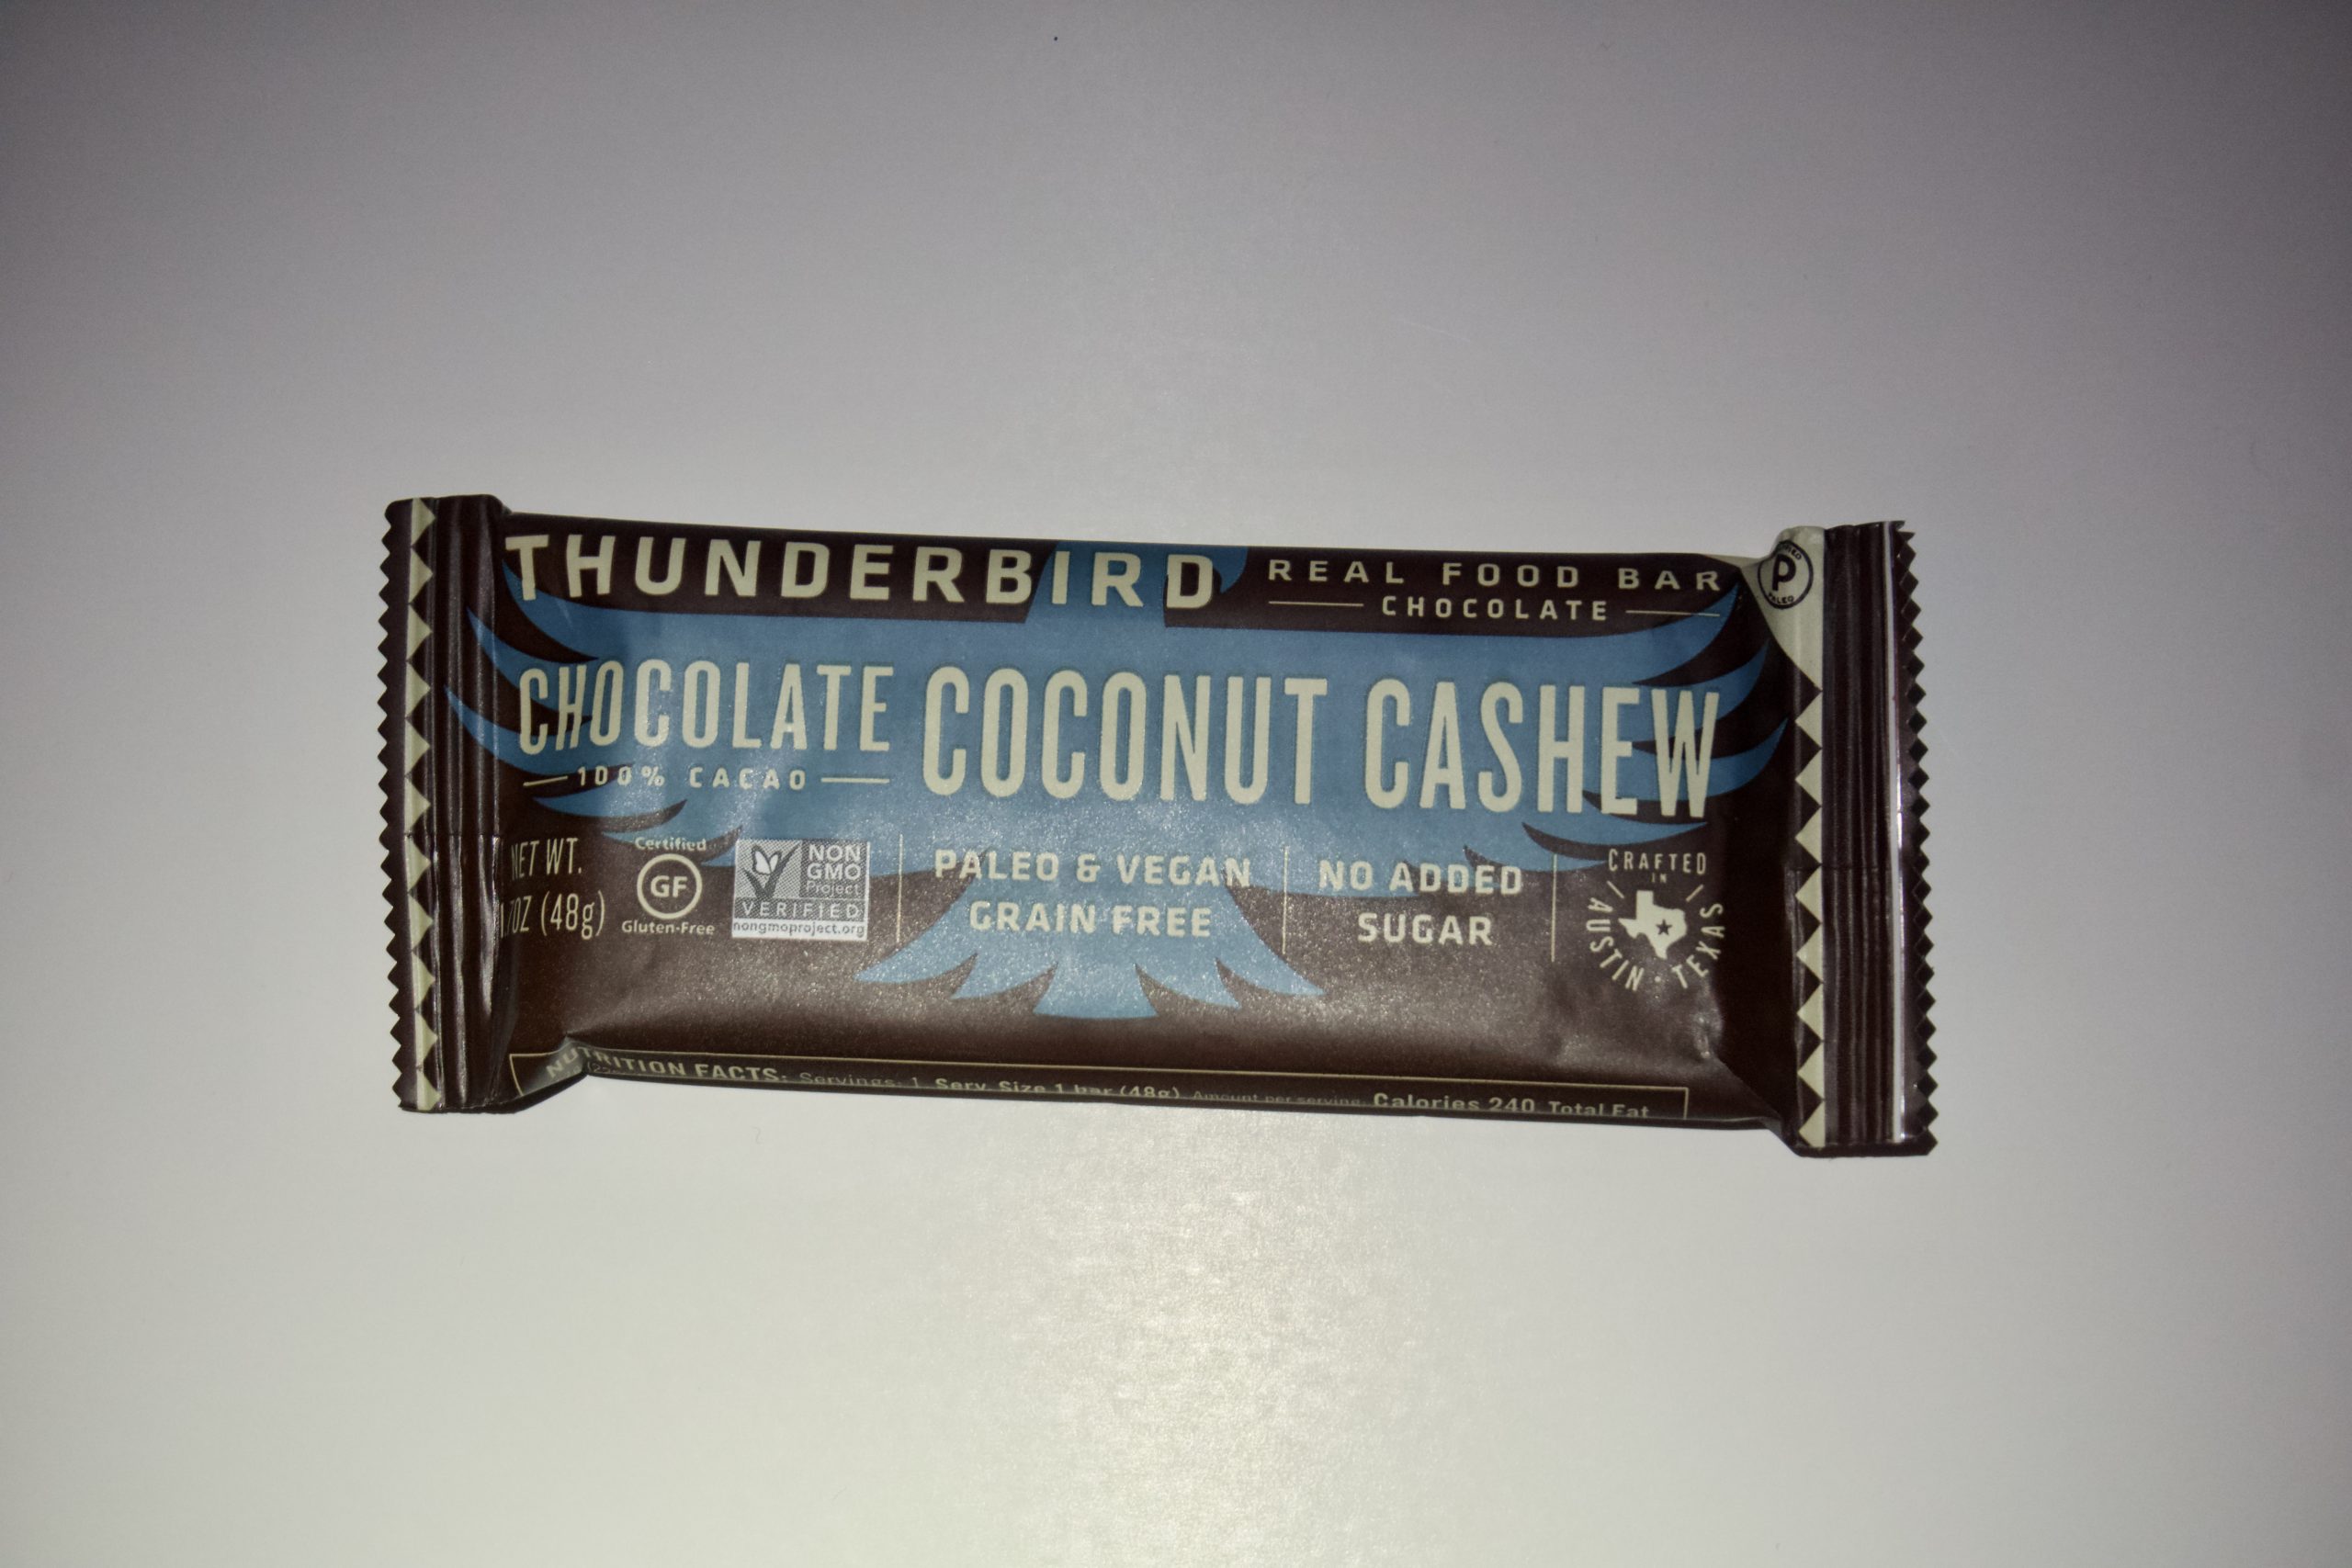 Thunderbird Real Food Bar